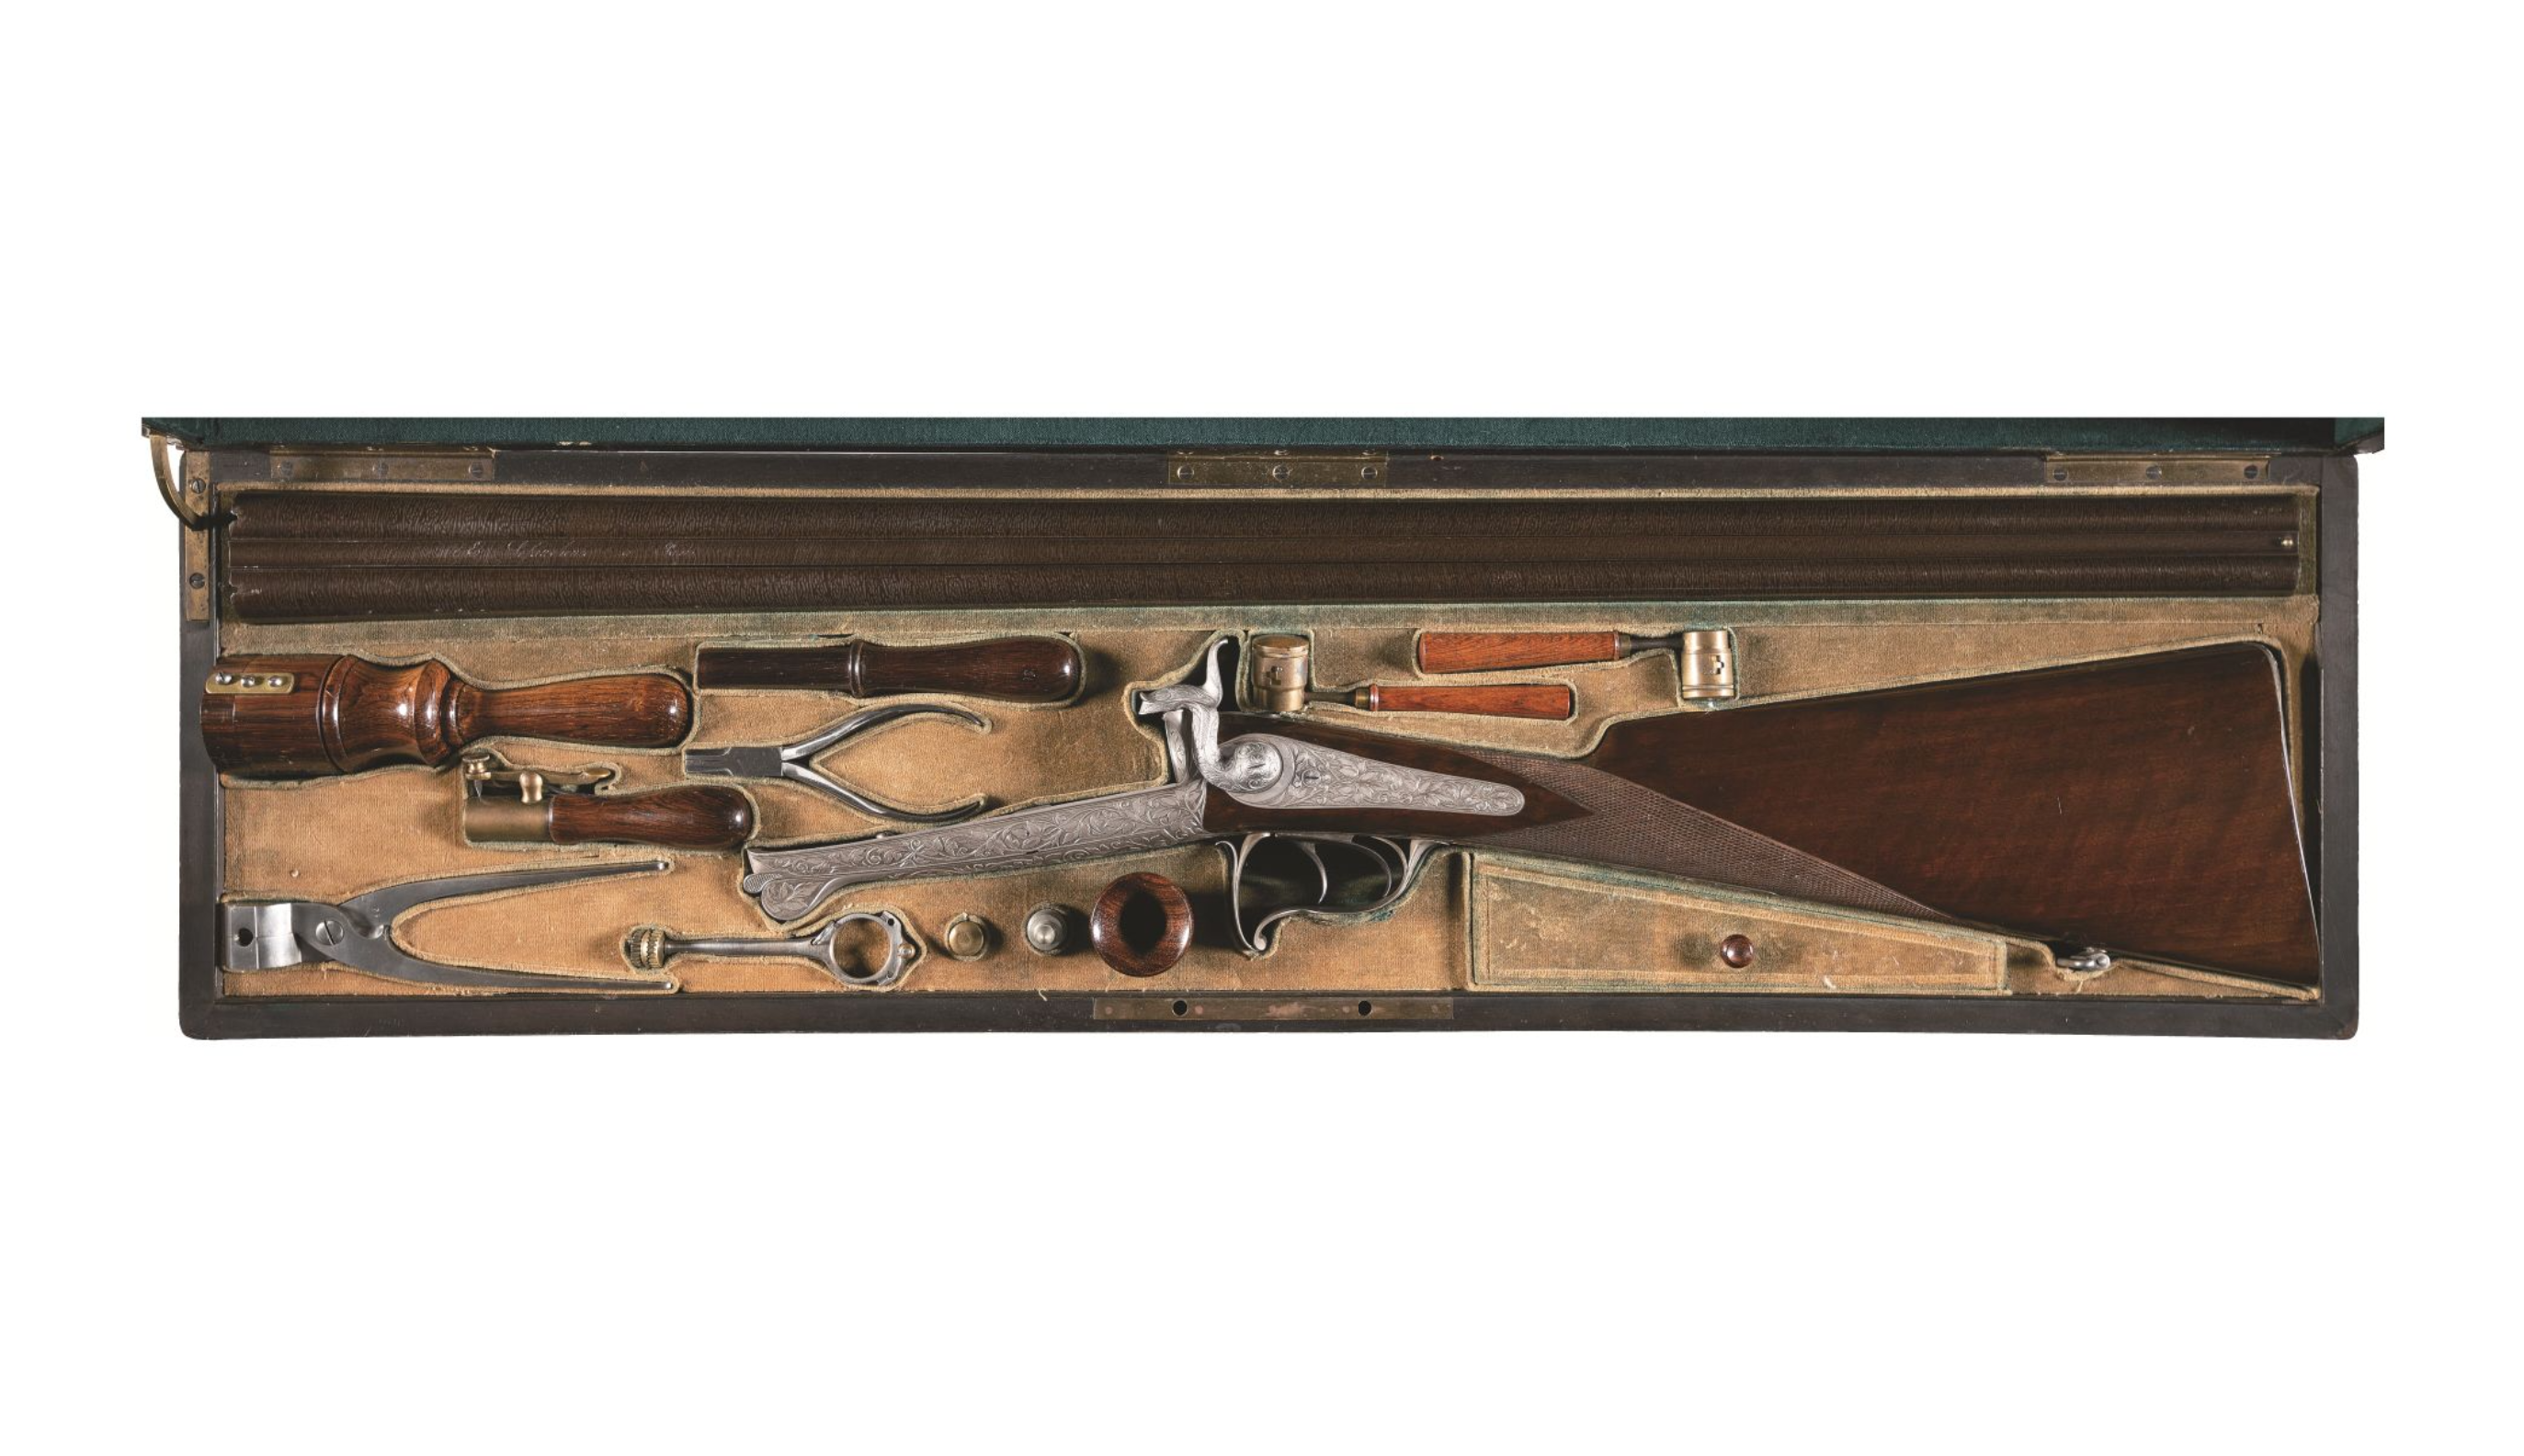 An early example of shotgun history. A pinfire.